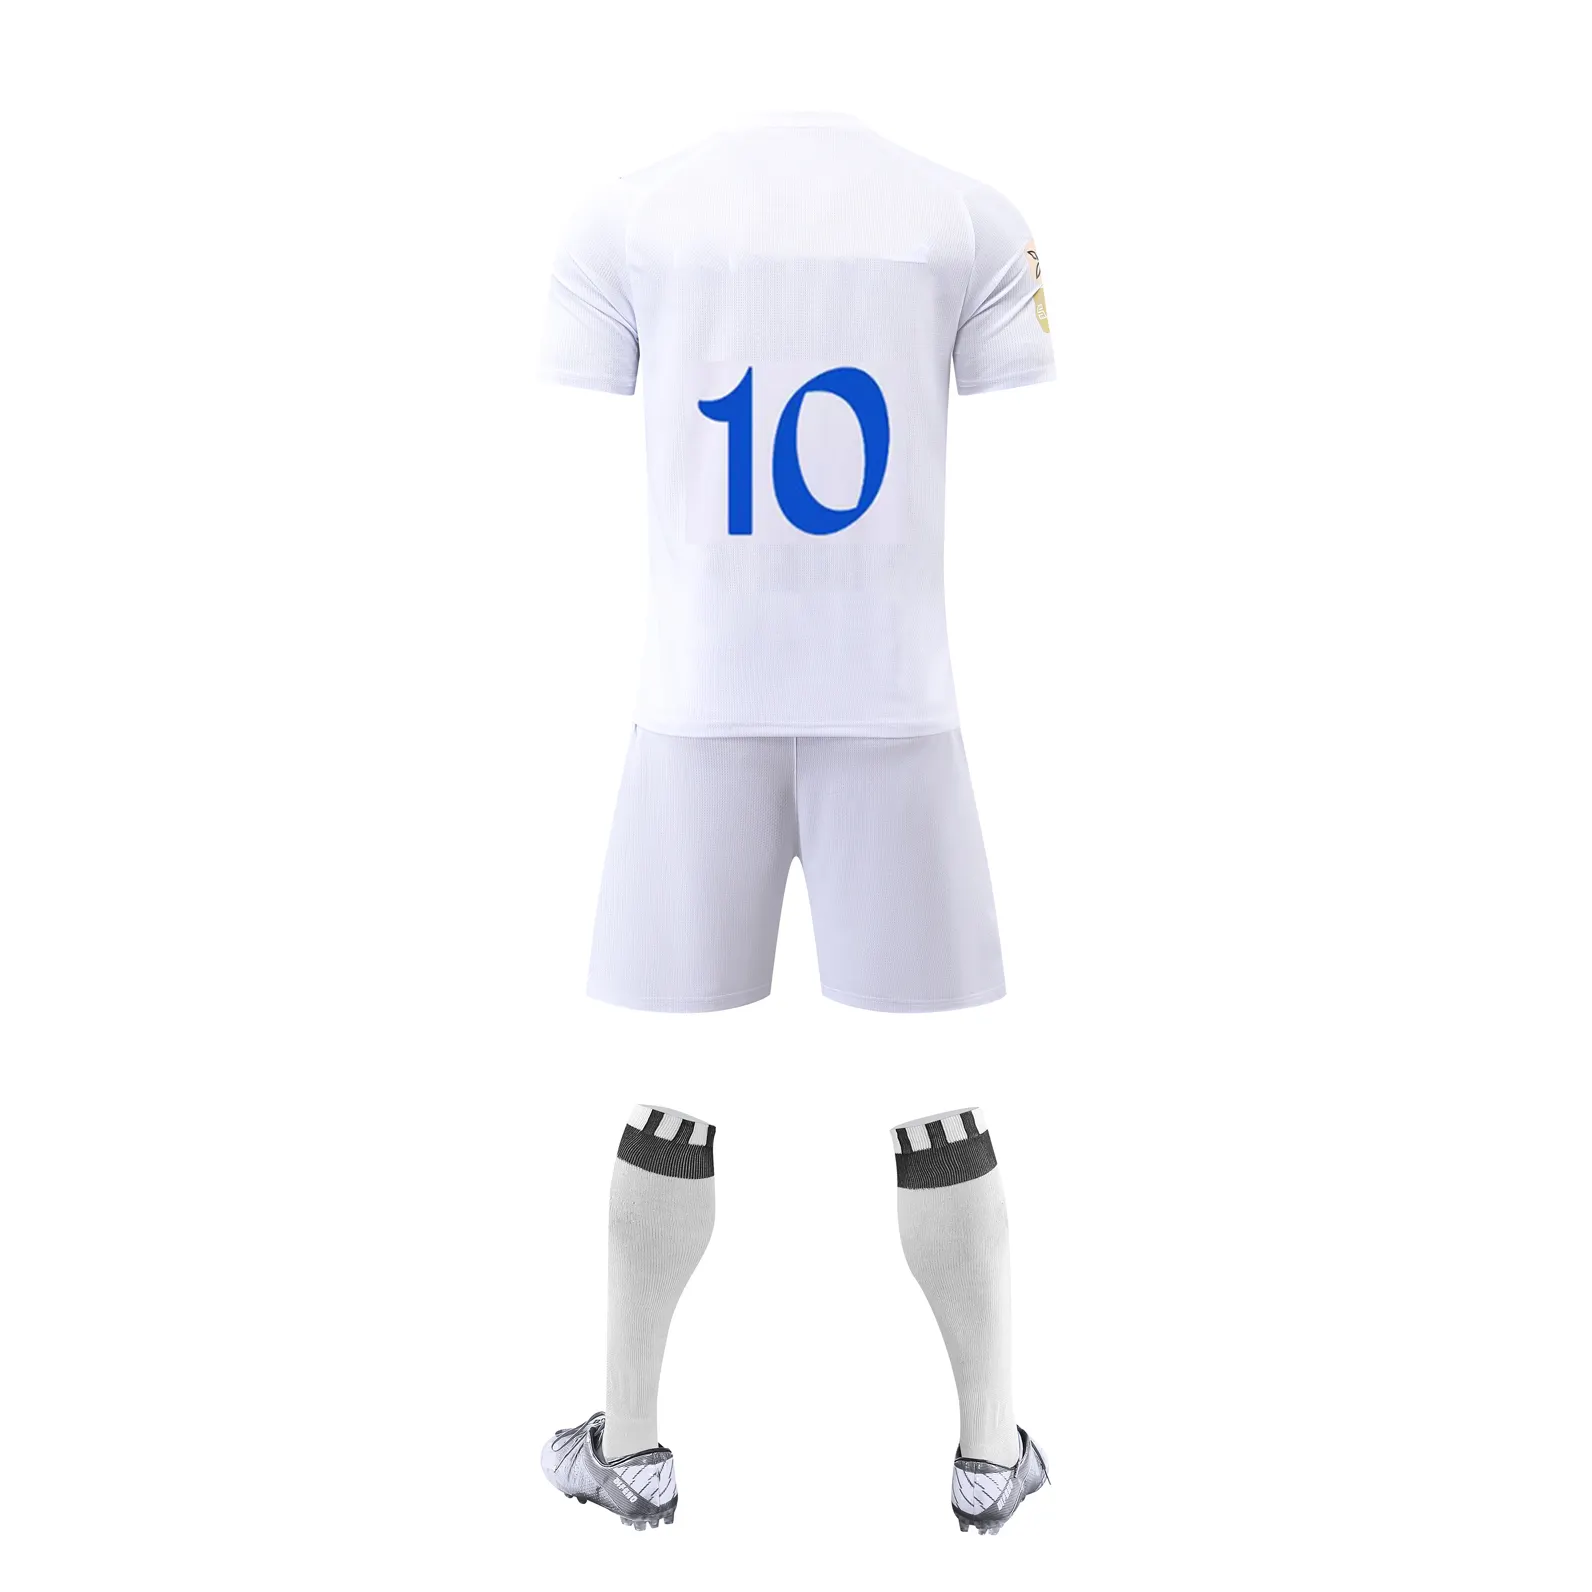 Custom Adult Customized Soccer Jersey Wear Maillot De Football Shirt Football Kits Full Soccer Kit Set Soccer Uniforms for Men